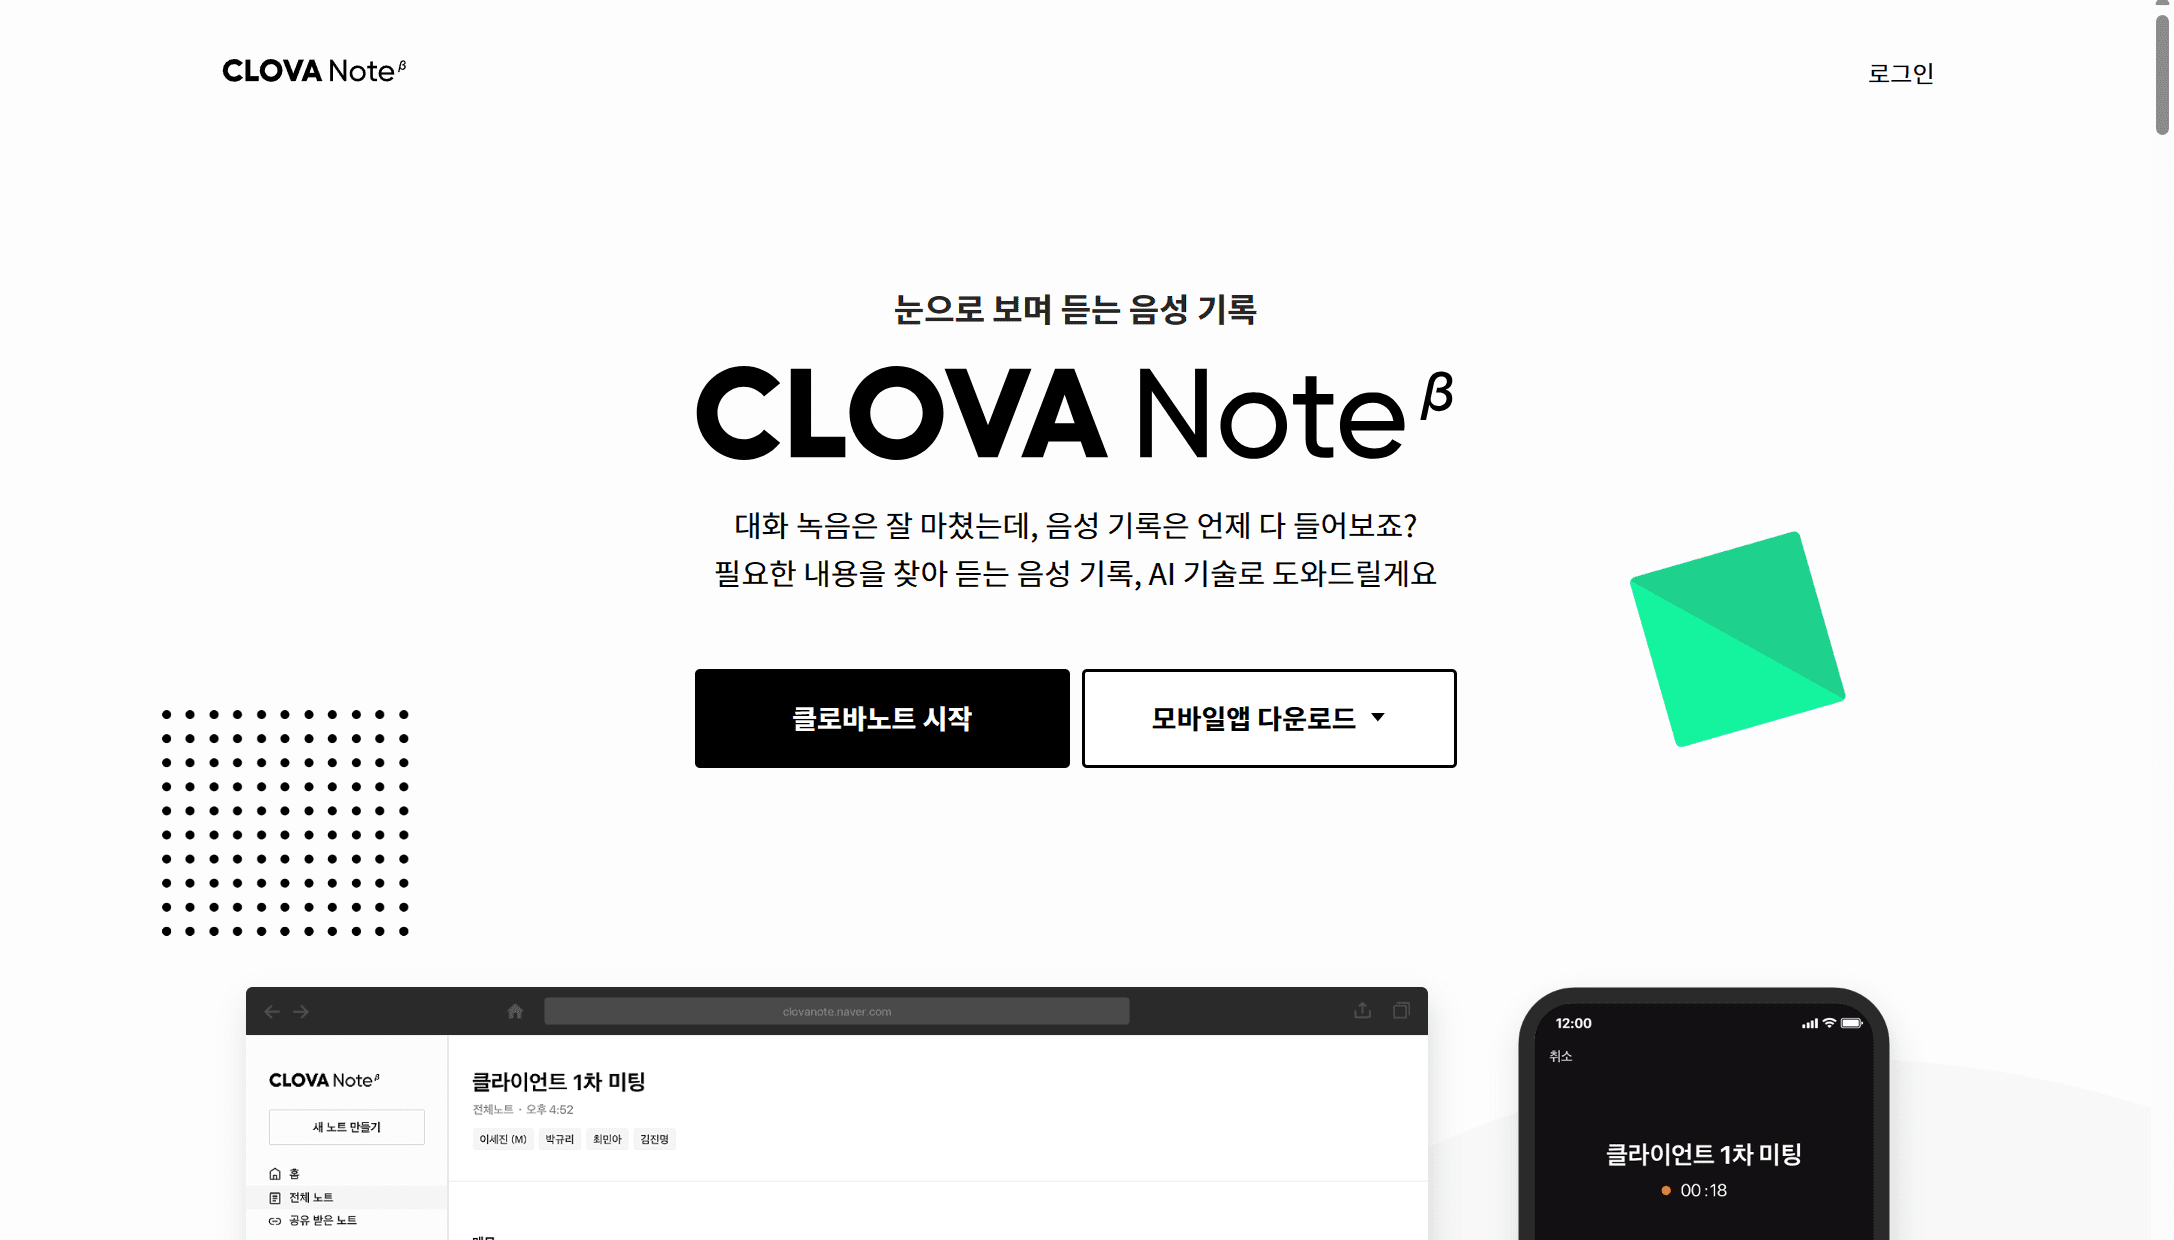 Clova Note is a powerful Korean meeting transcription tool